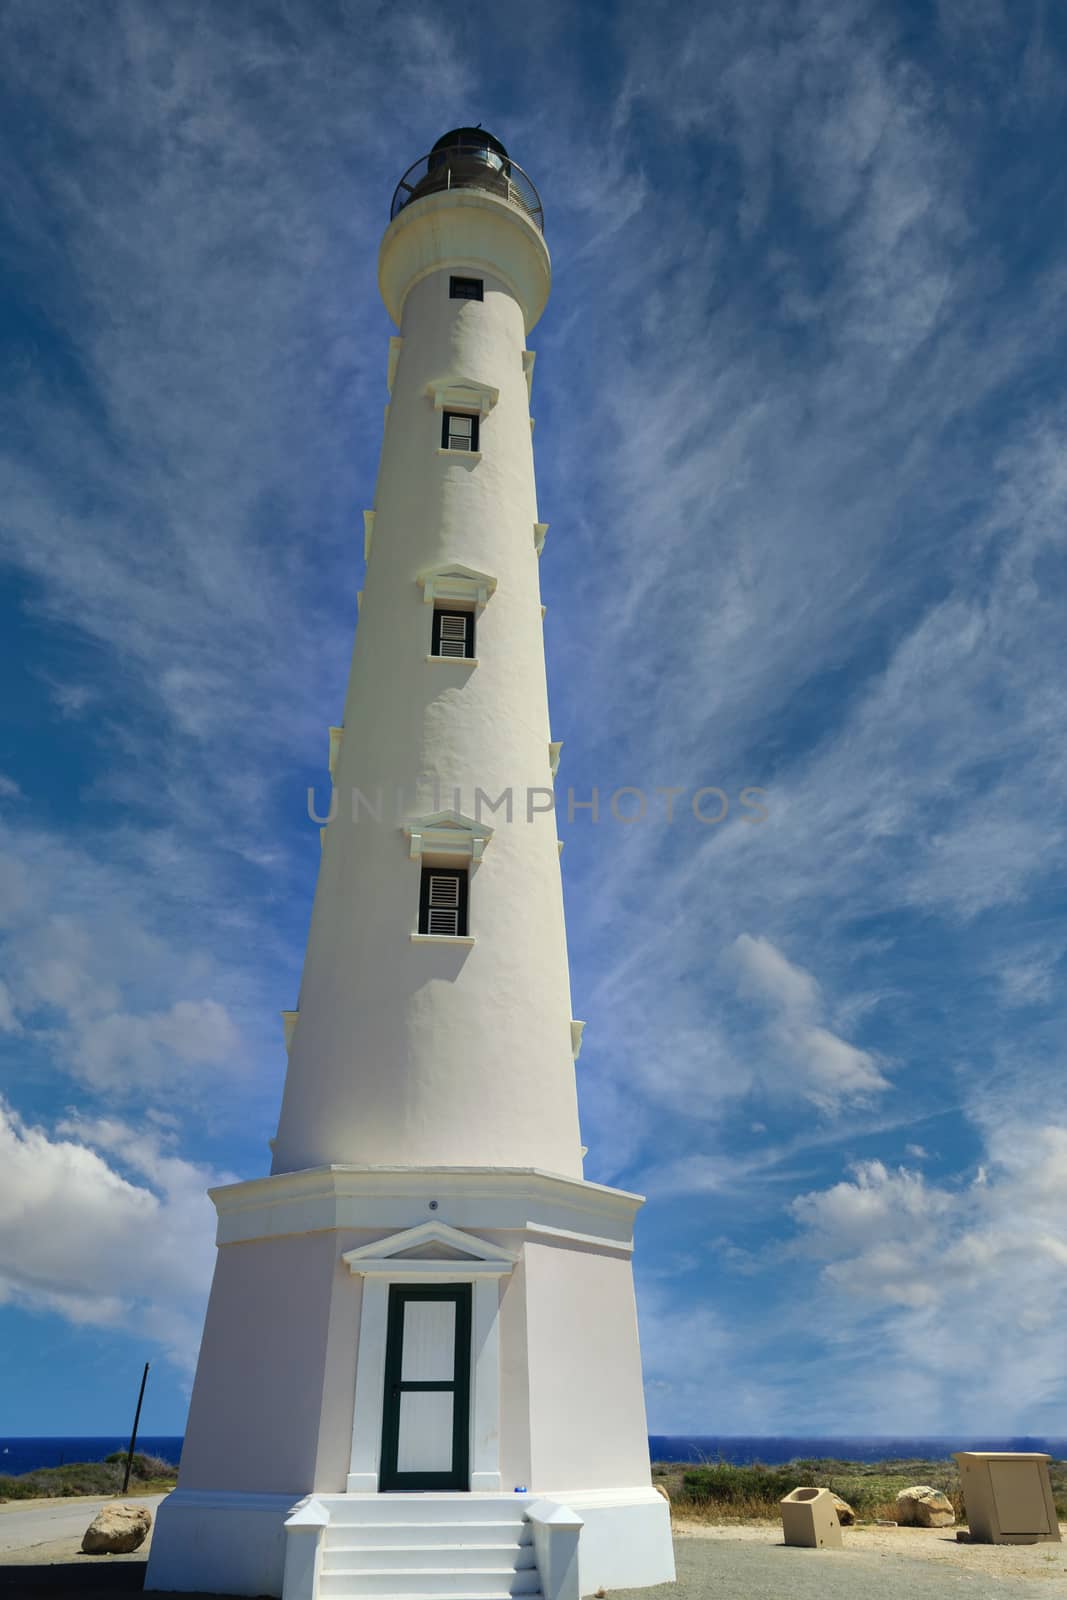 Remodeled Aruba Lighthouse by dbvirago